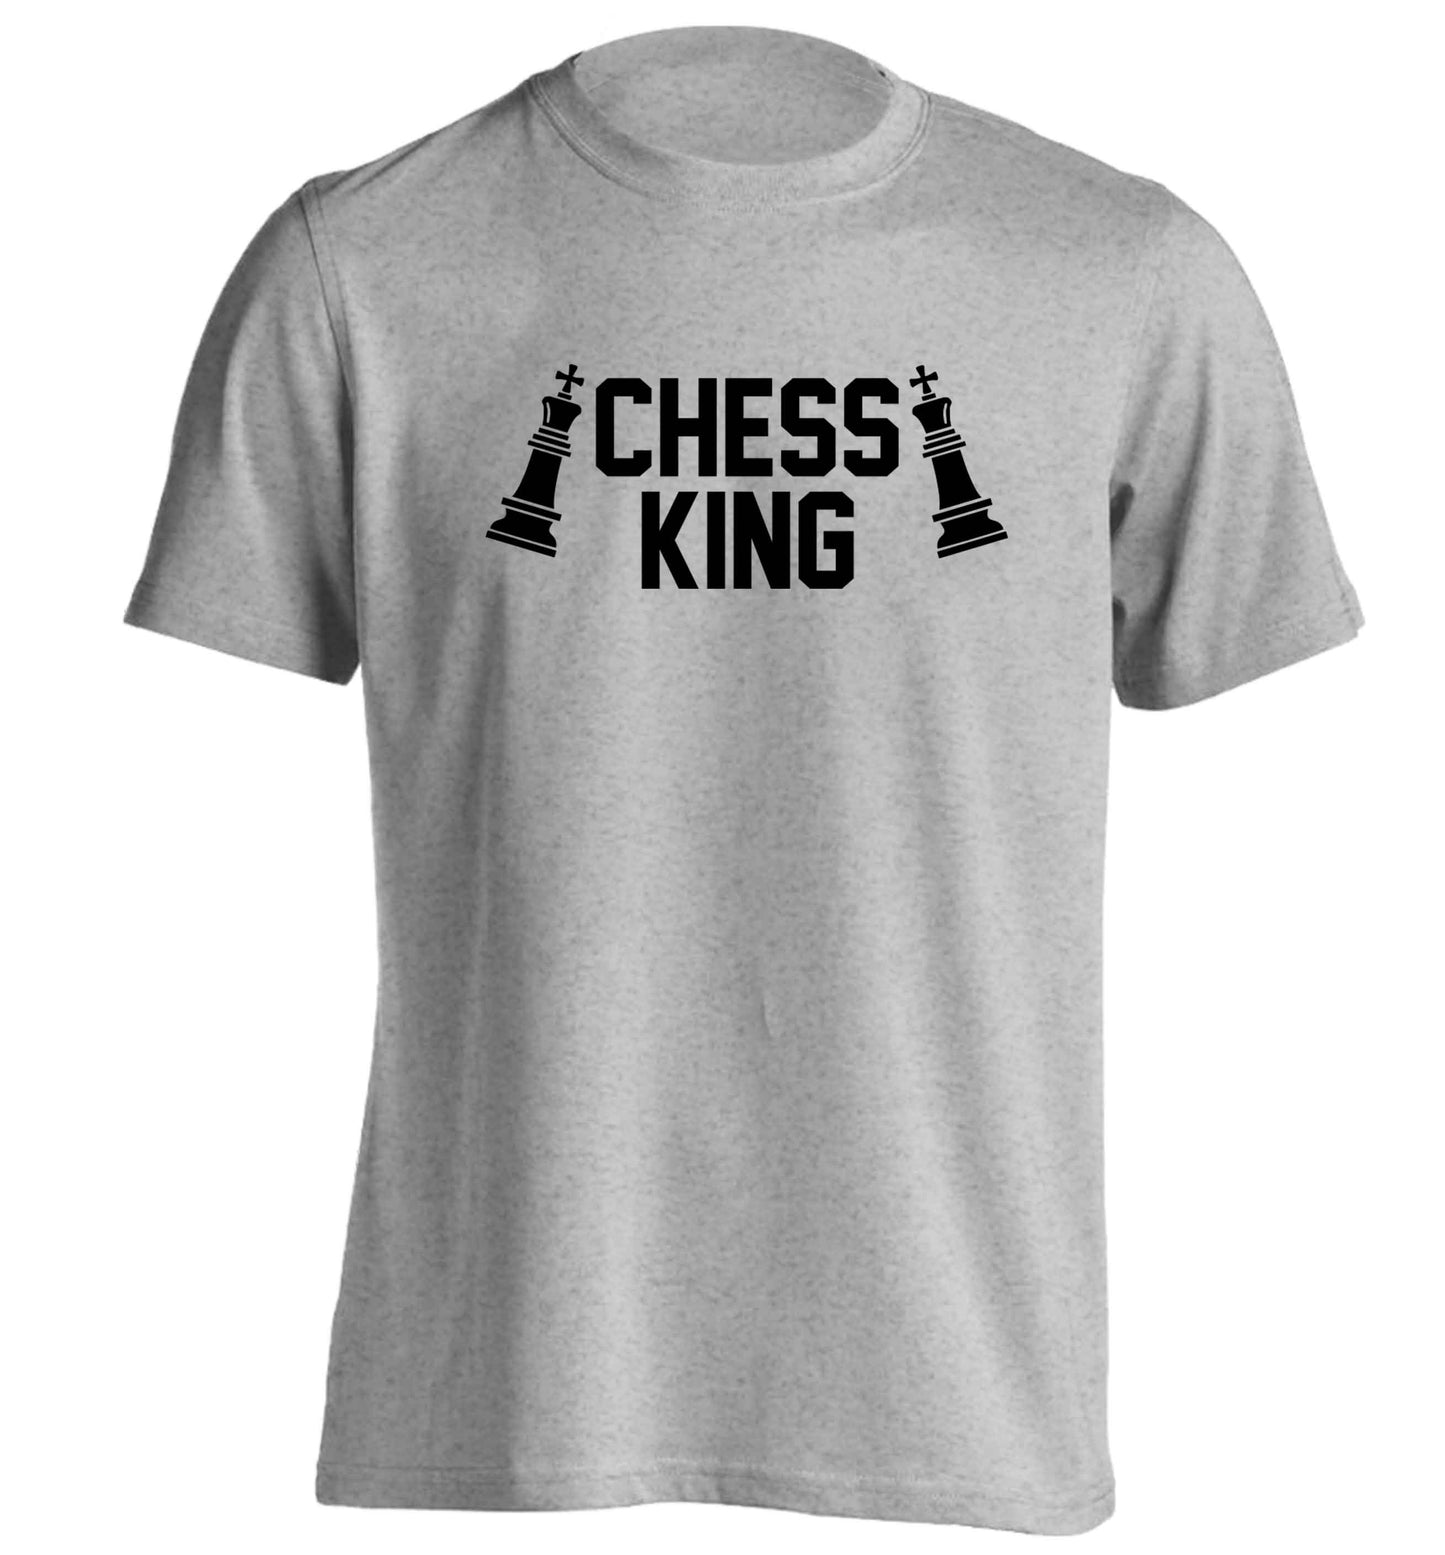 Chess king adults unisex grey Tshirt 2XL